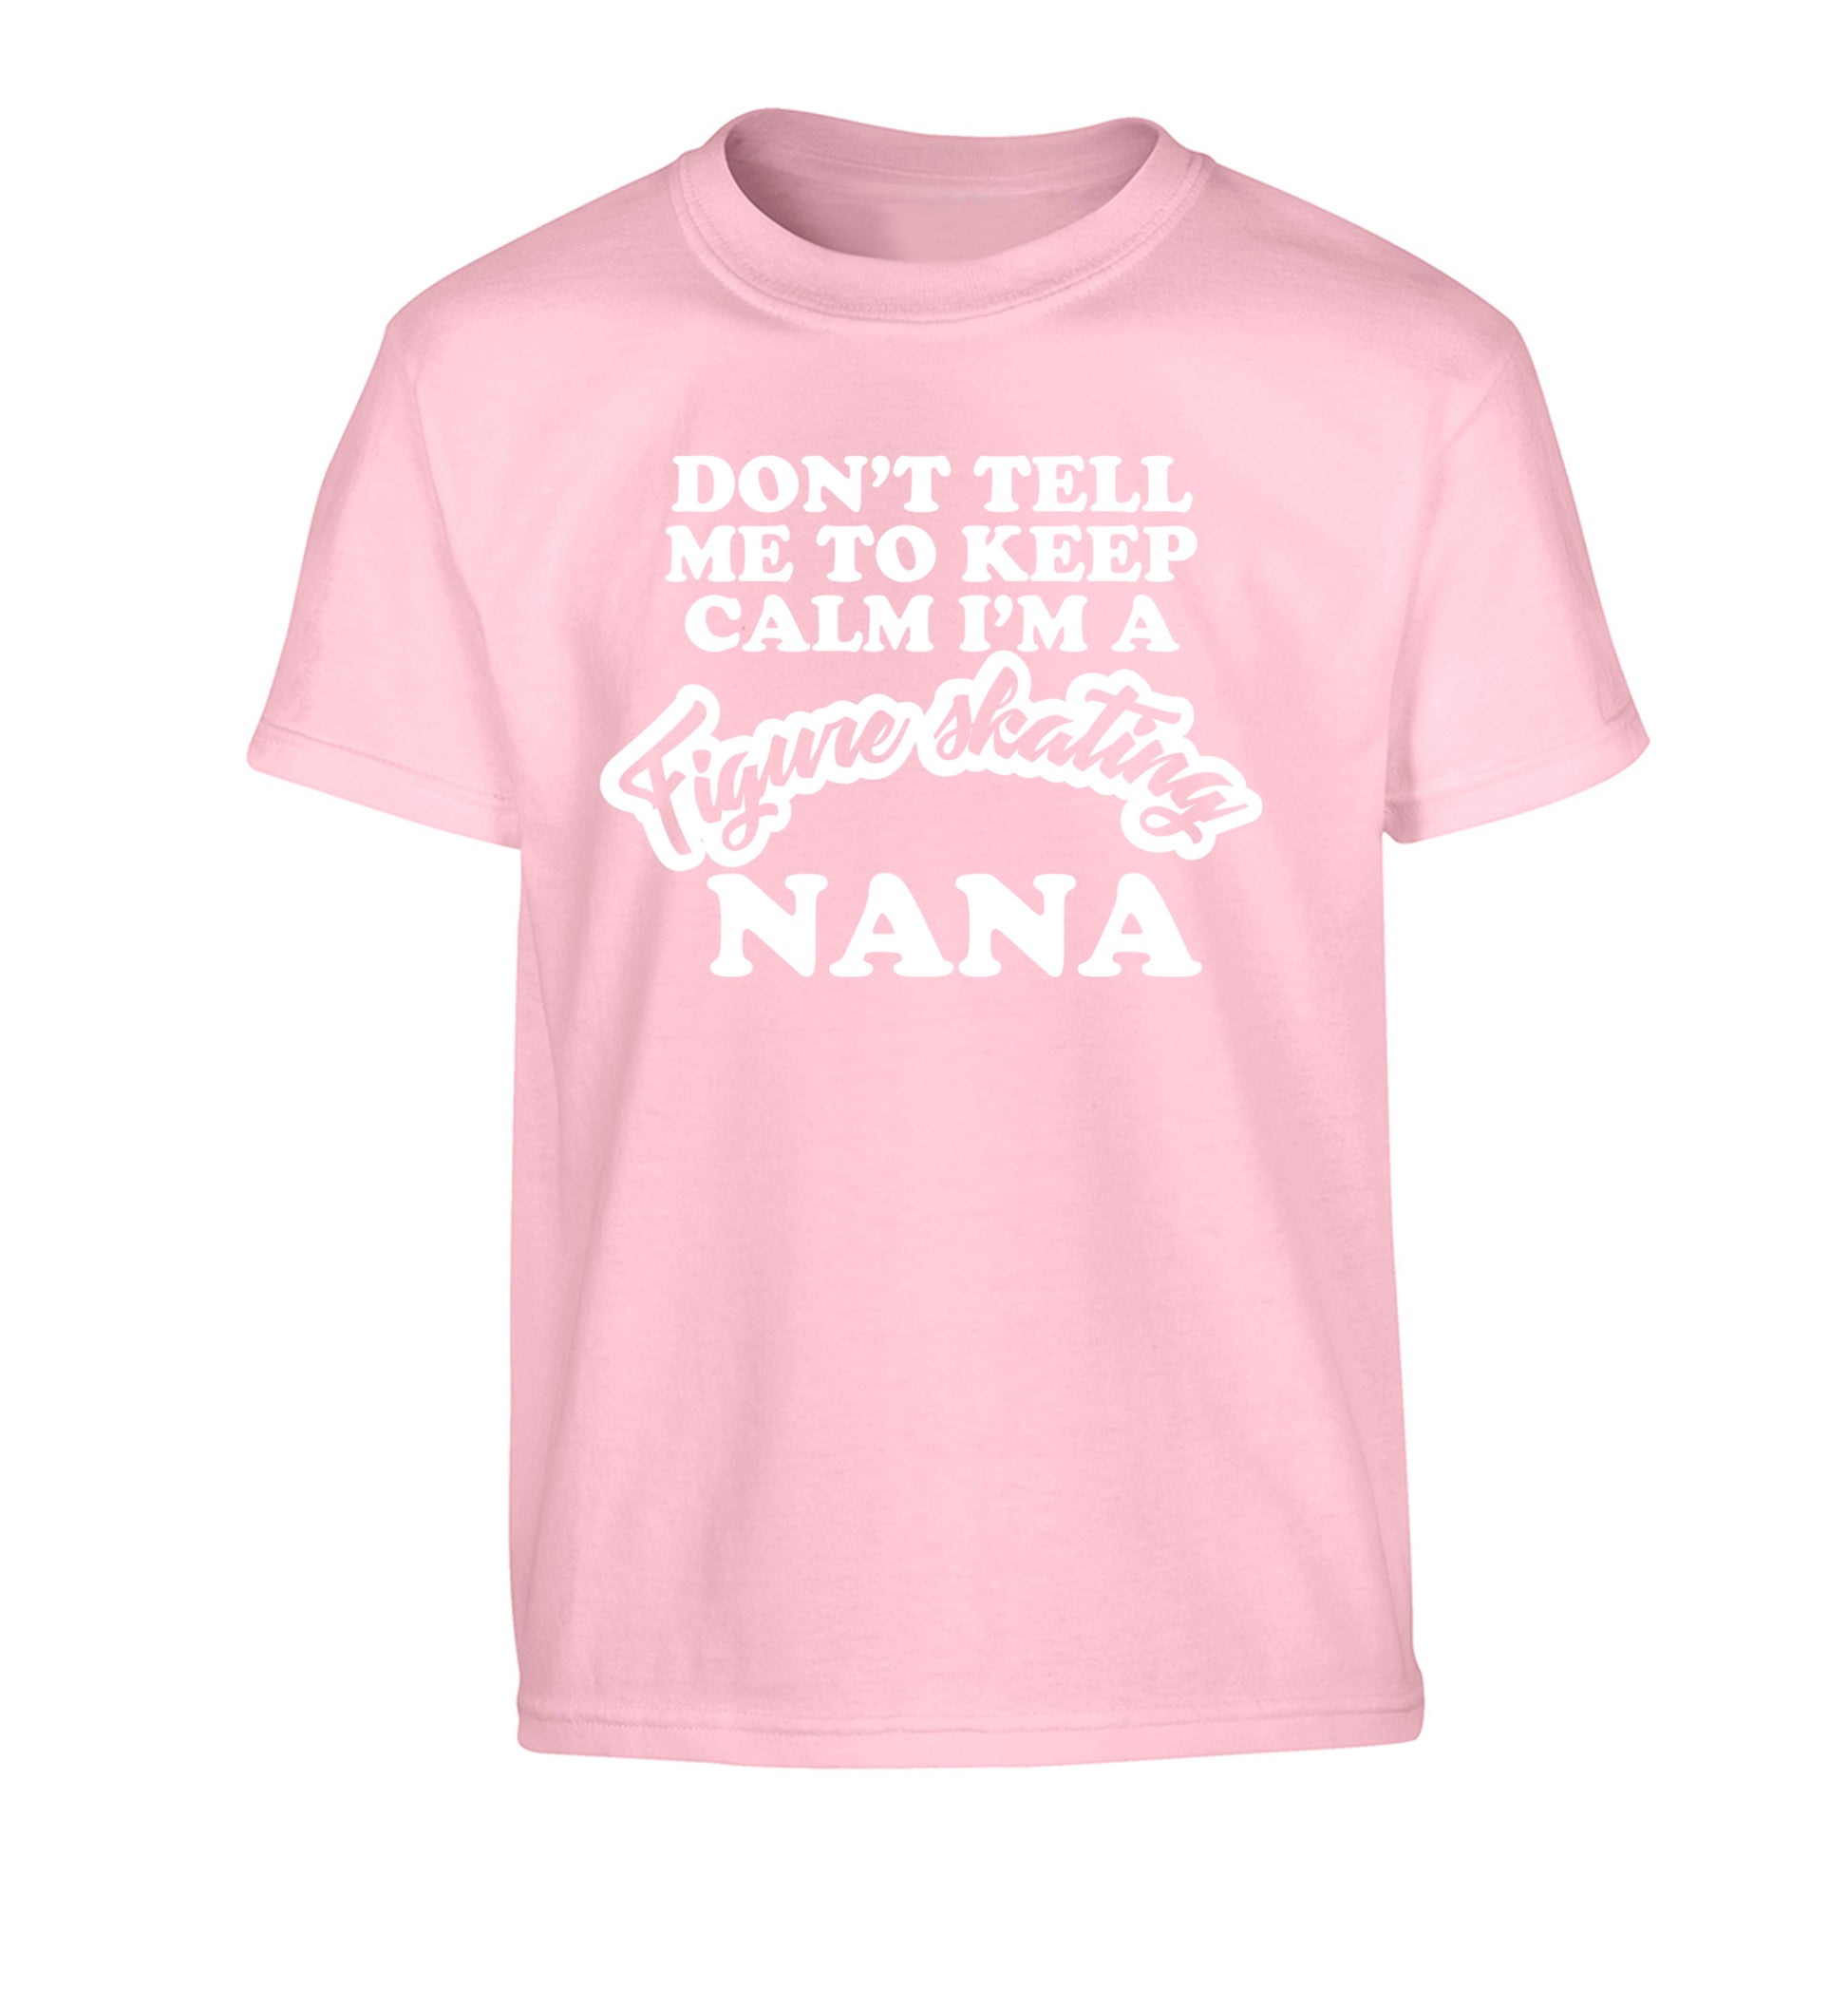 Don't tell me to keep calm I'm a figure skating nana Children's light pink Tshirt 12-14 Years